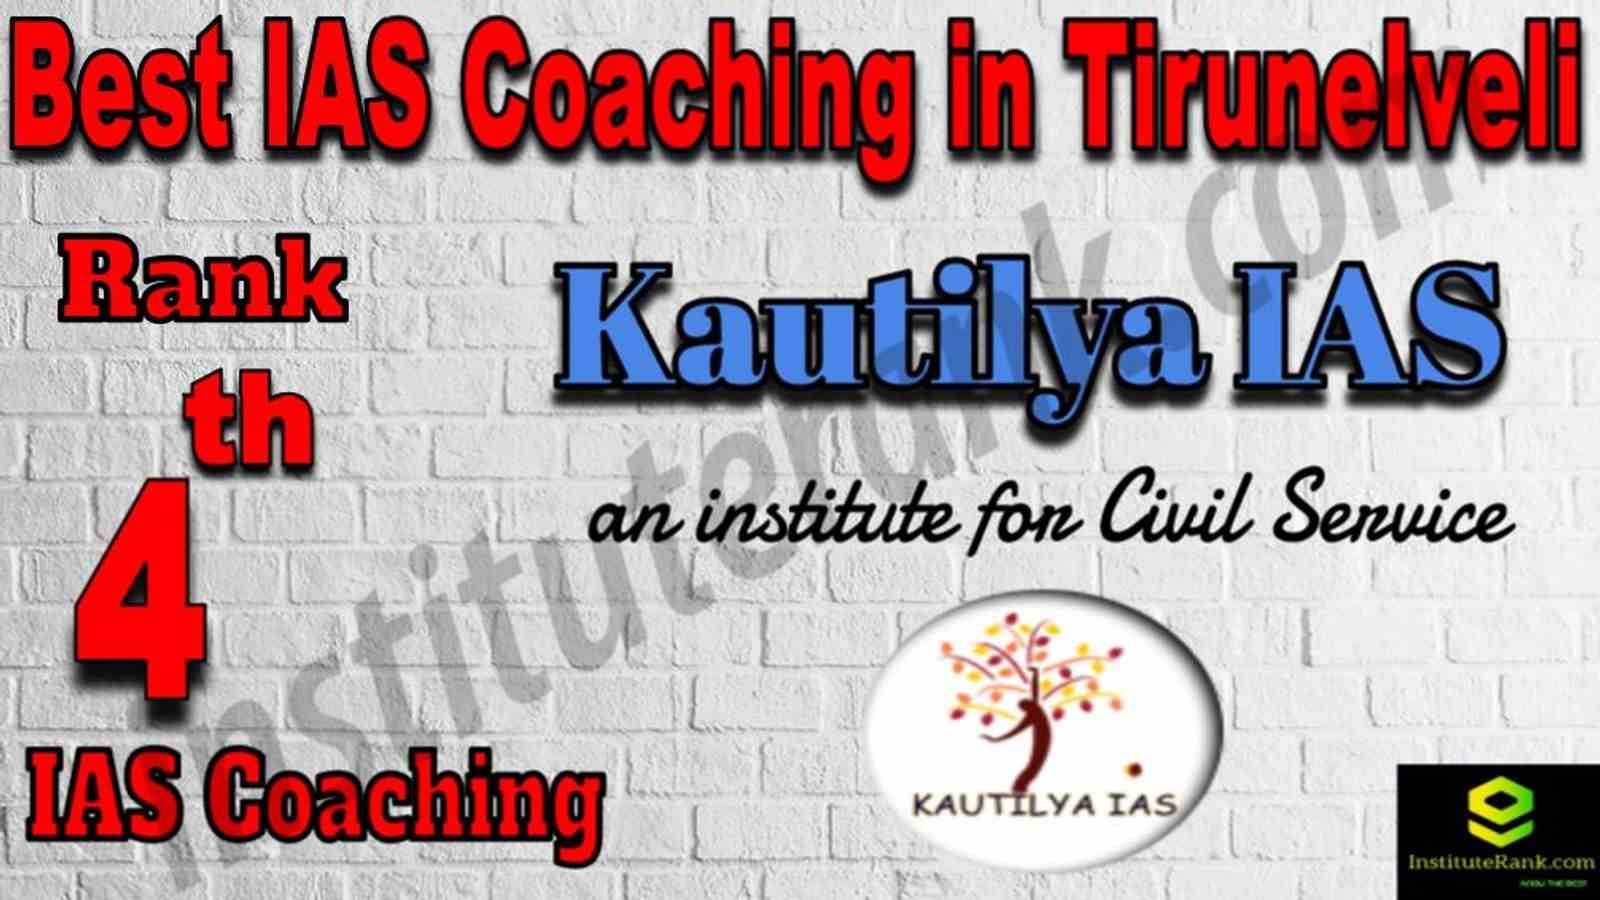 4th Best IAS Coaching in Tirunelveli